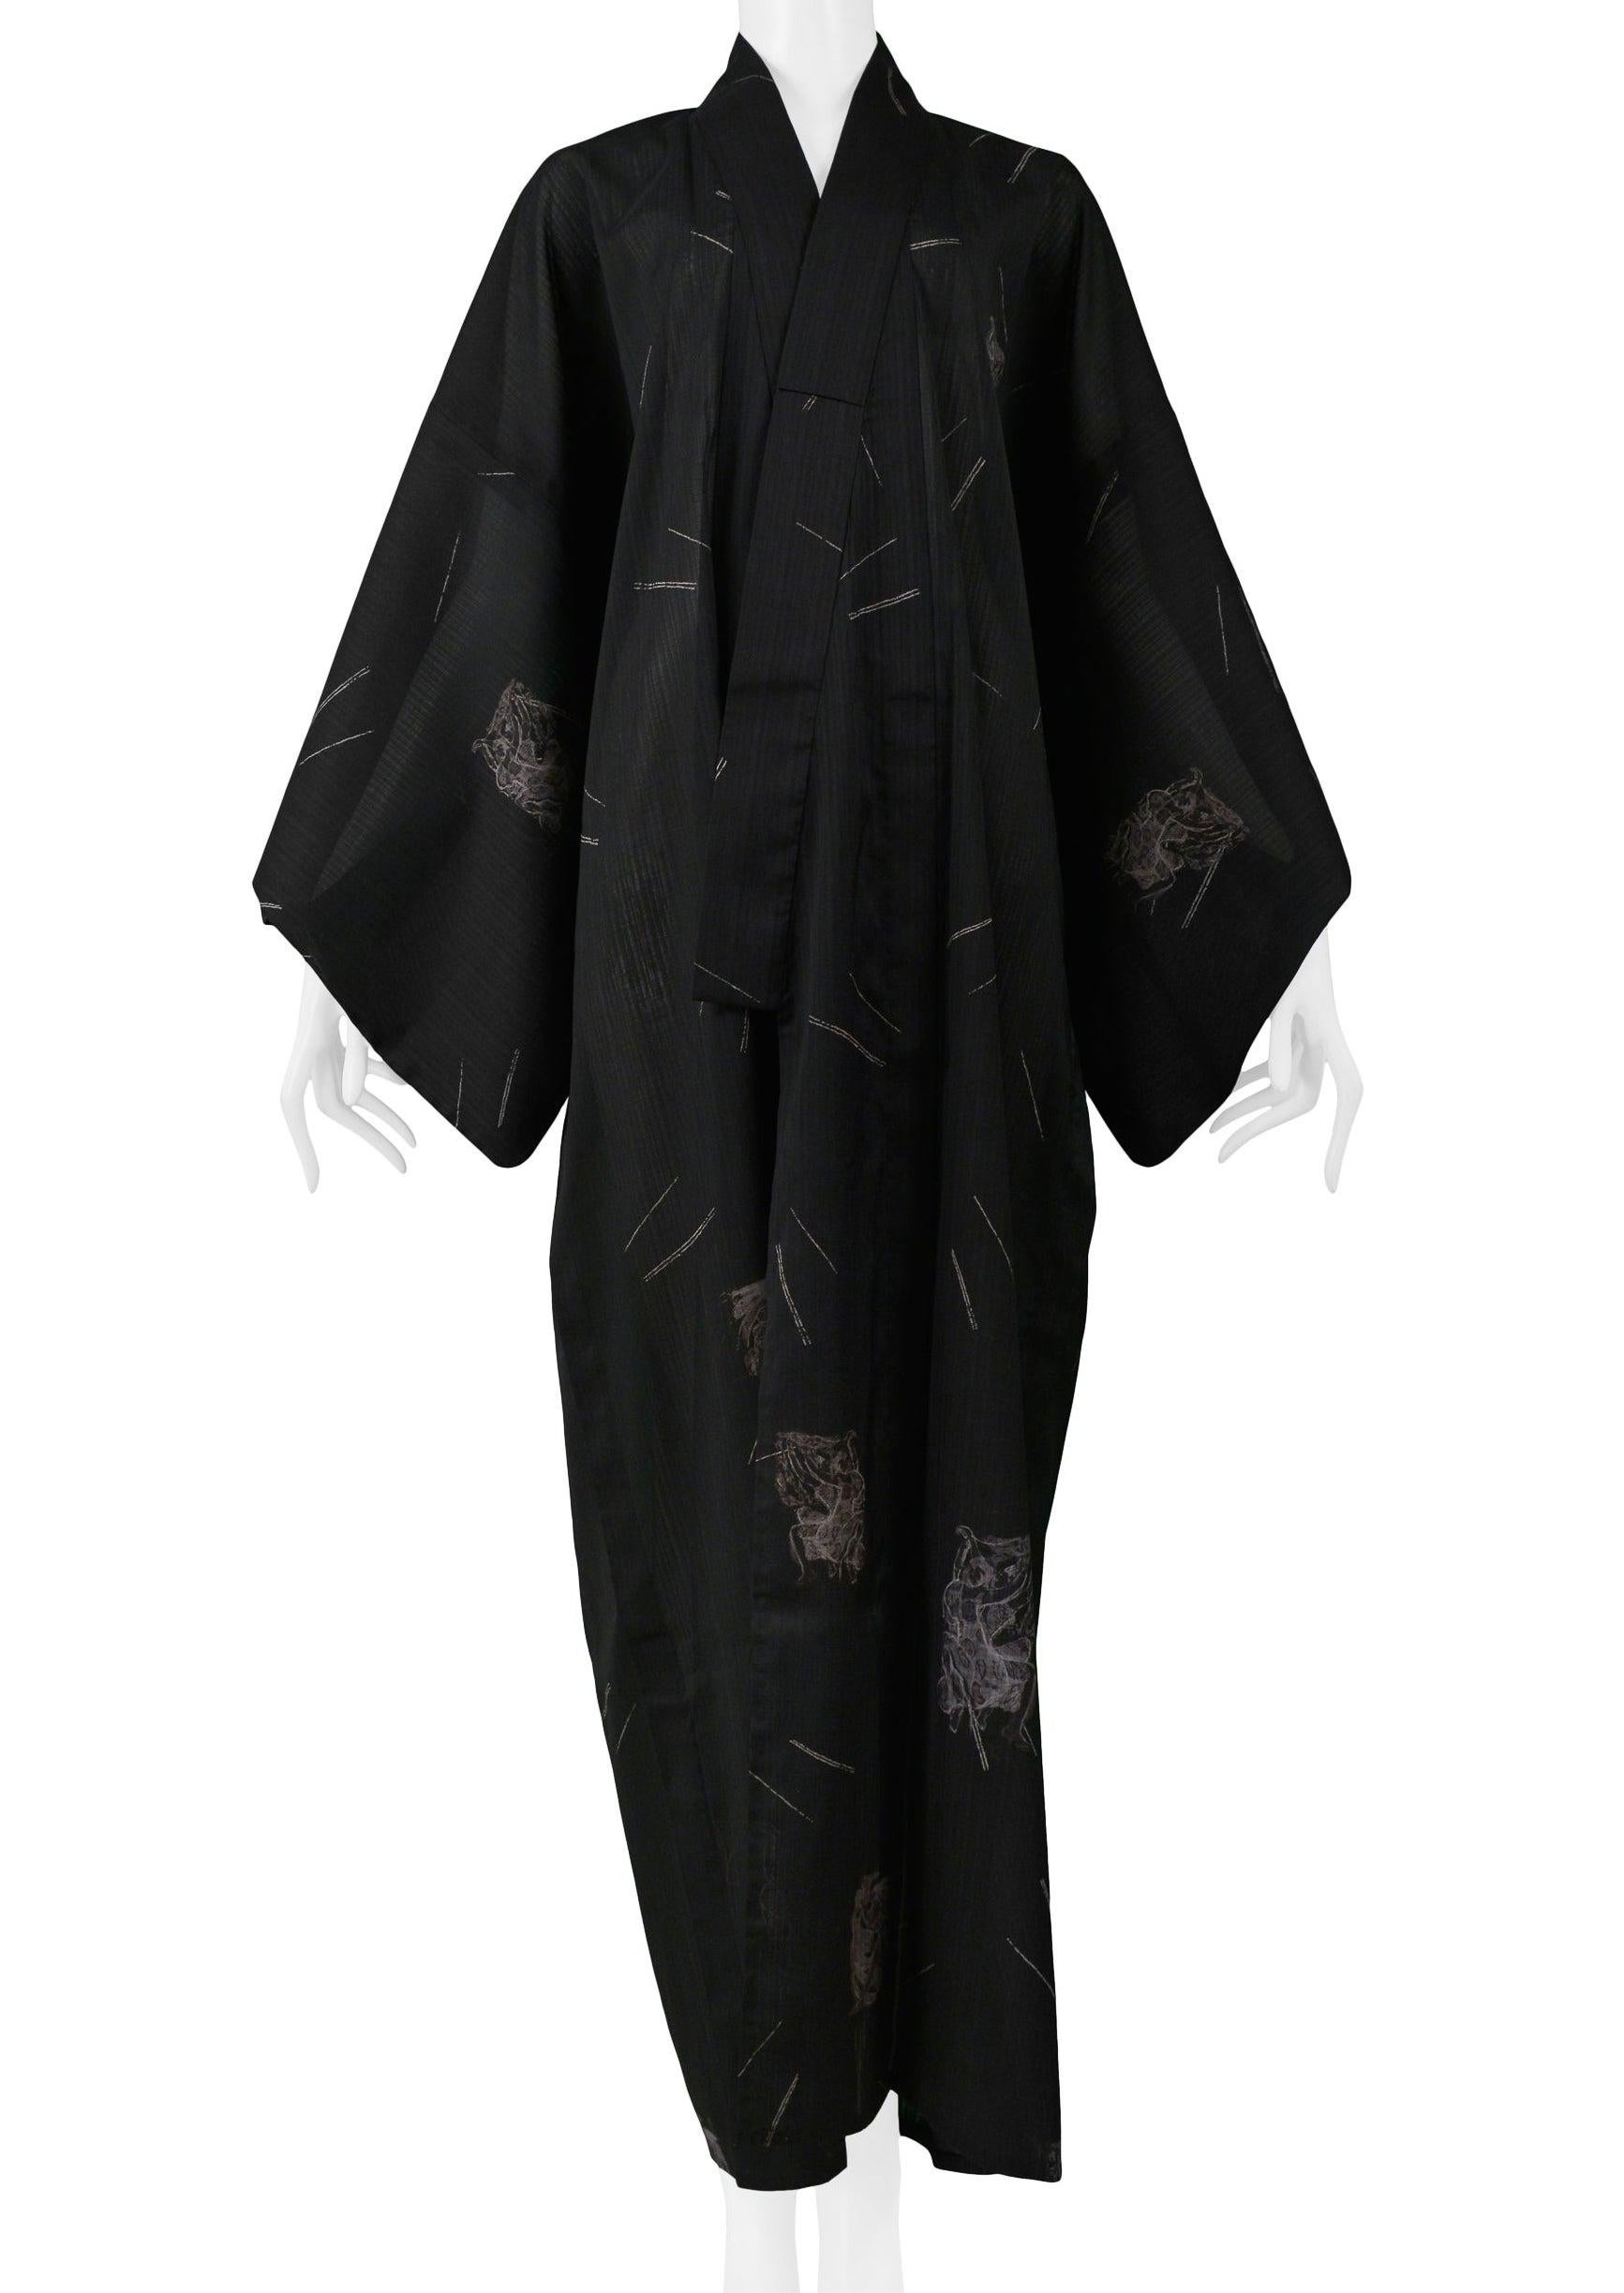 Jean Paul Gaultier Black & Gray Dancers Kimono Robe 2002 For Sale 5